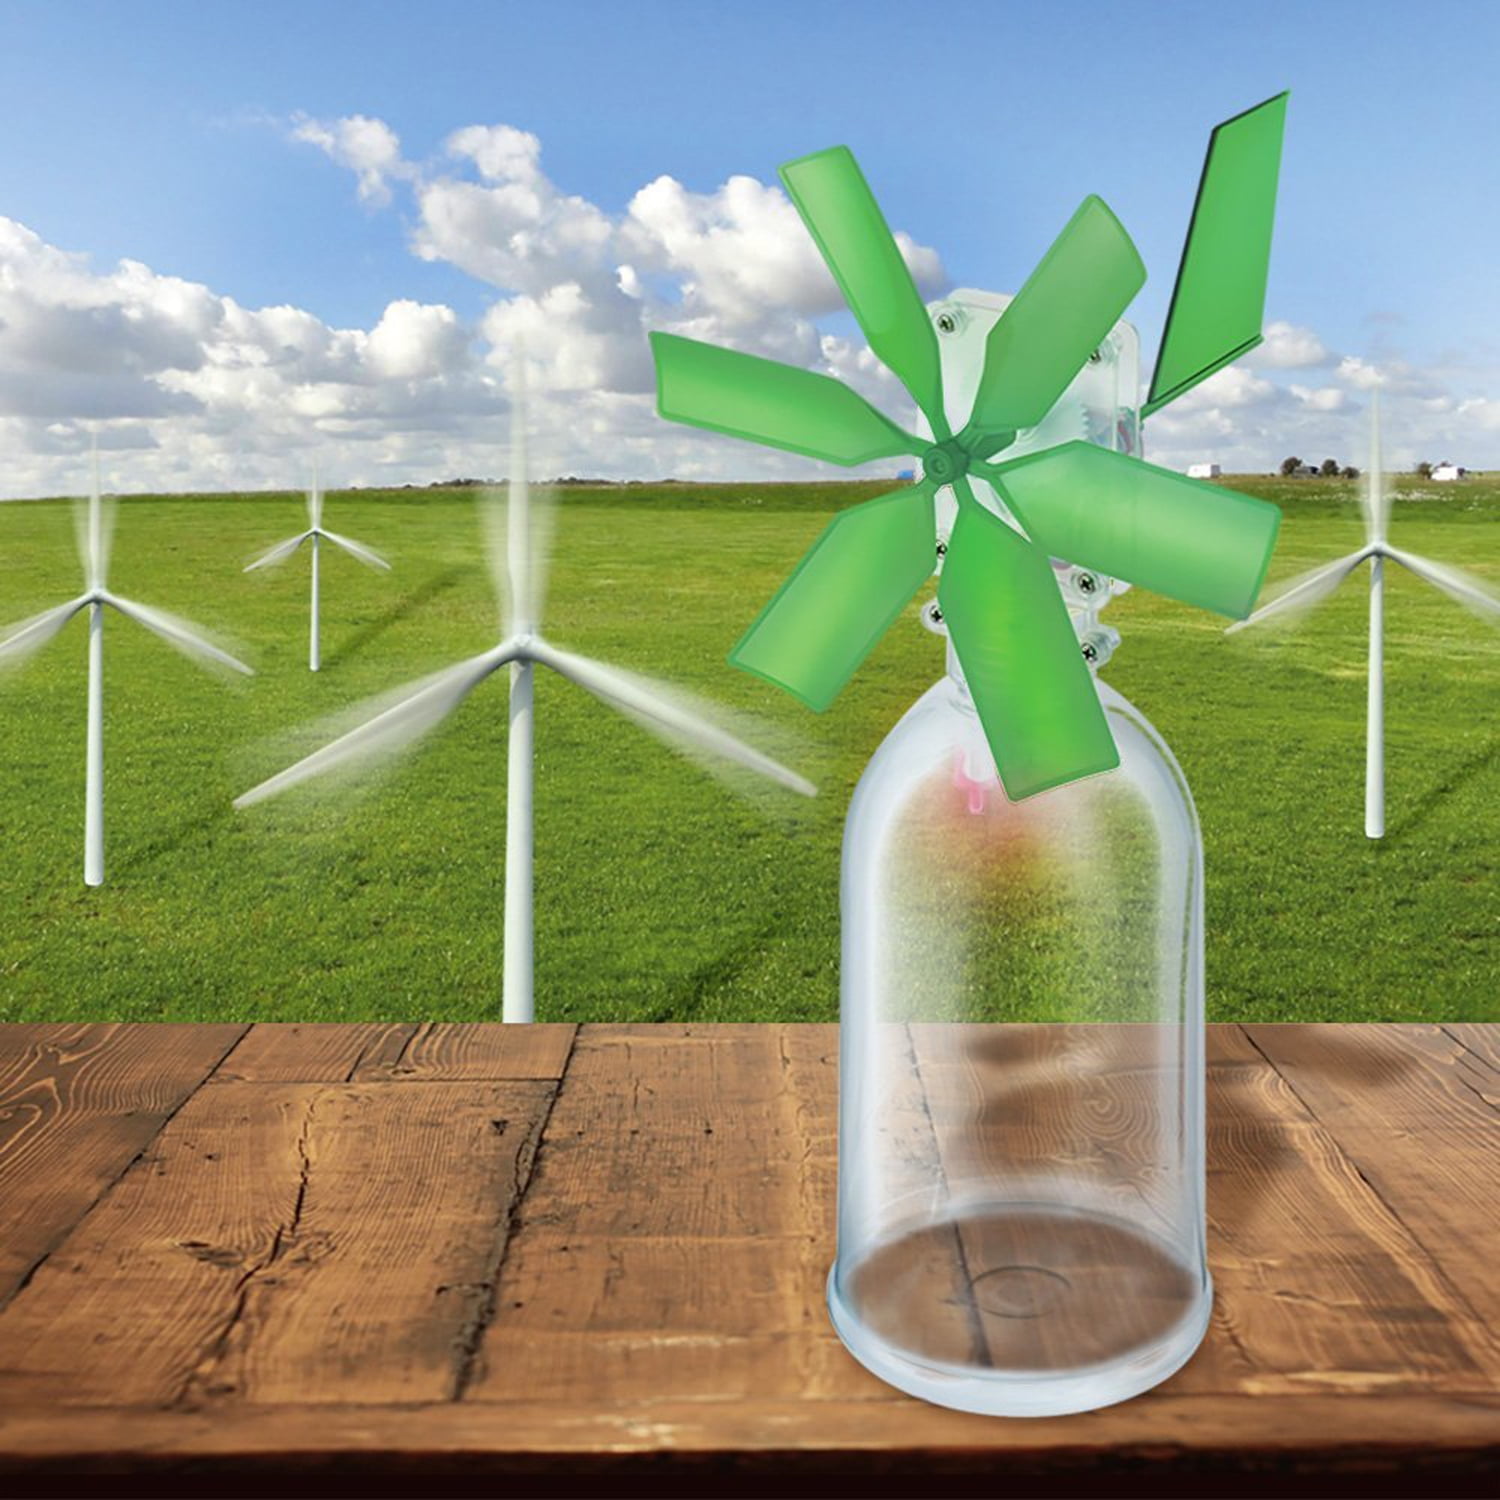 Windmill Generator Green Science Project Kit Renewable Energy Kids by Toysmith 